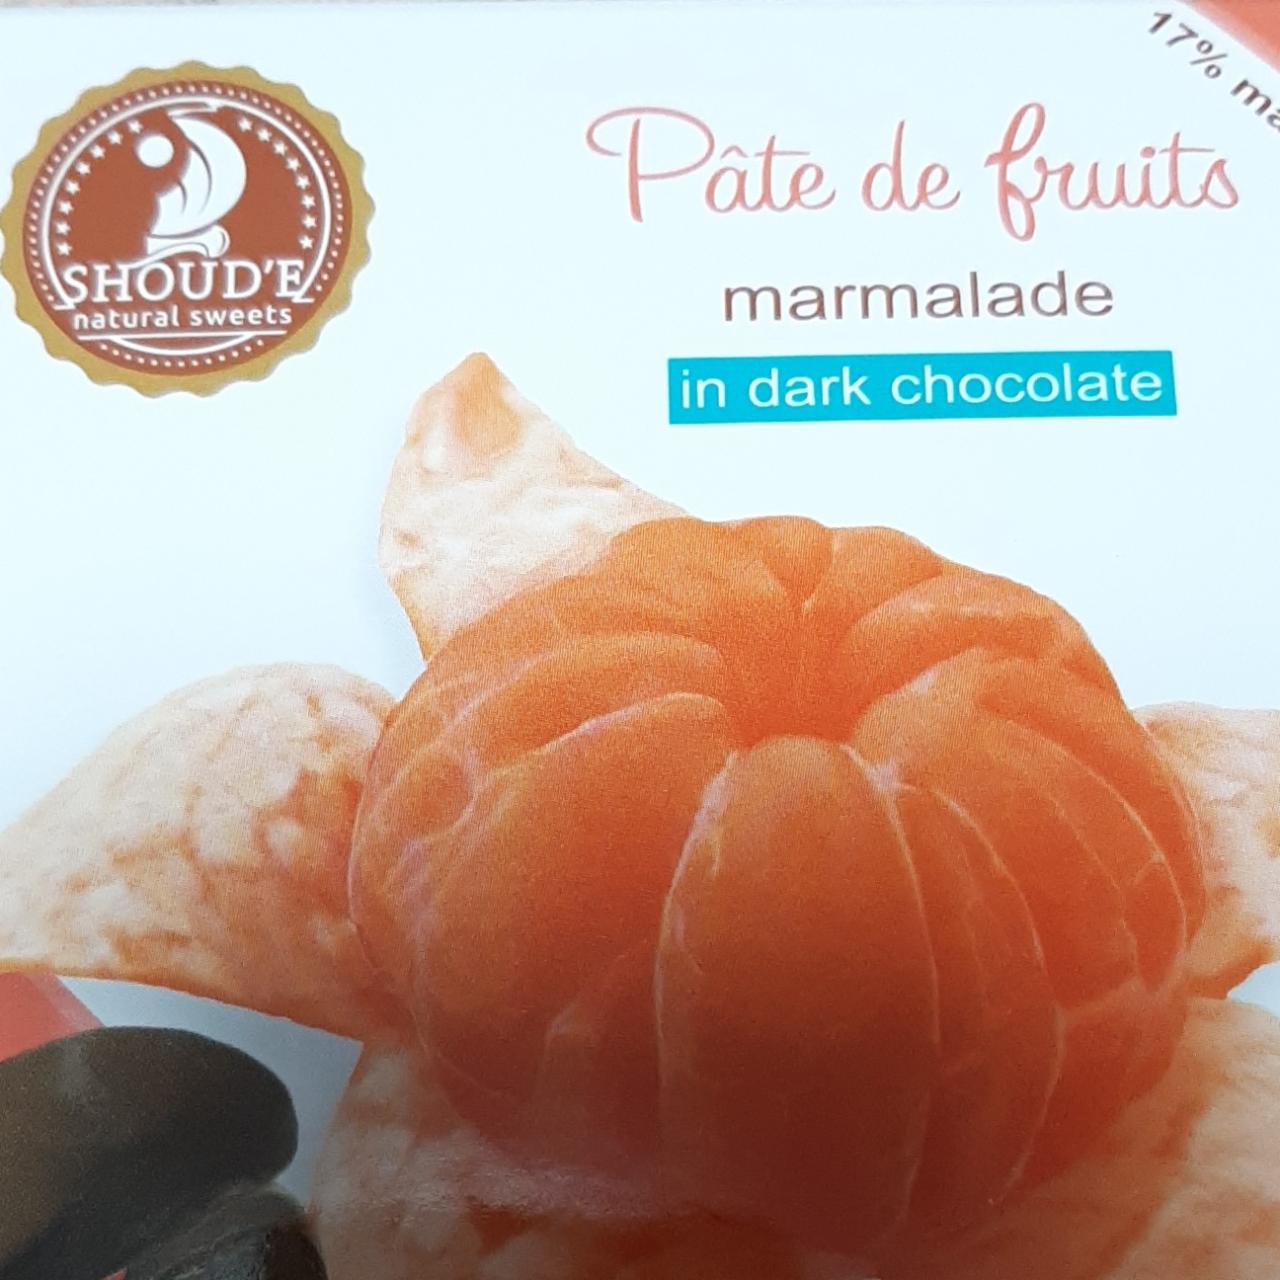 Фото - Мармелад в шоколаде Pate de fruits мандарин Shoud'e